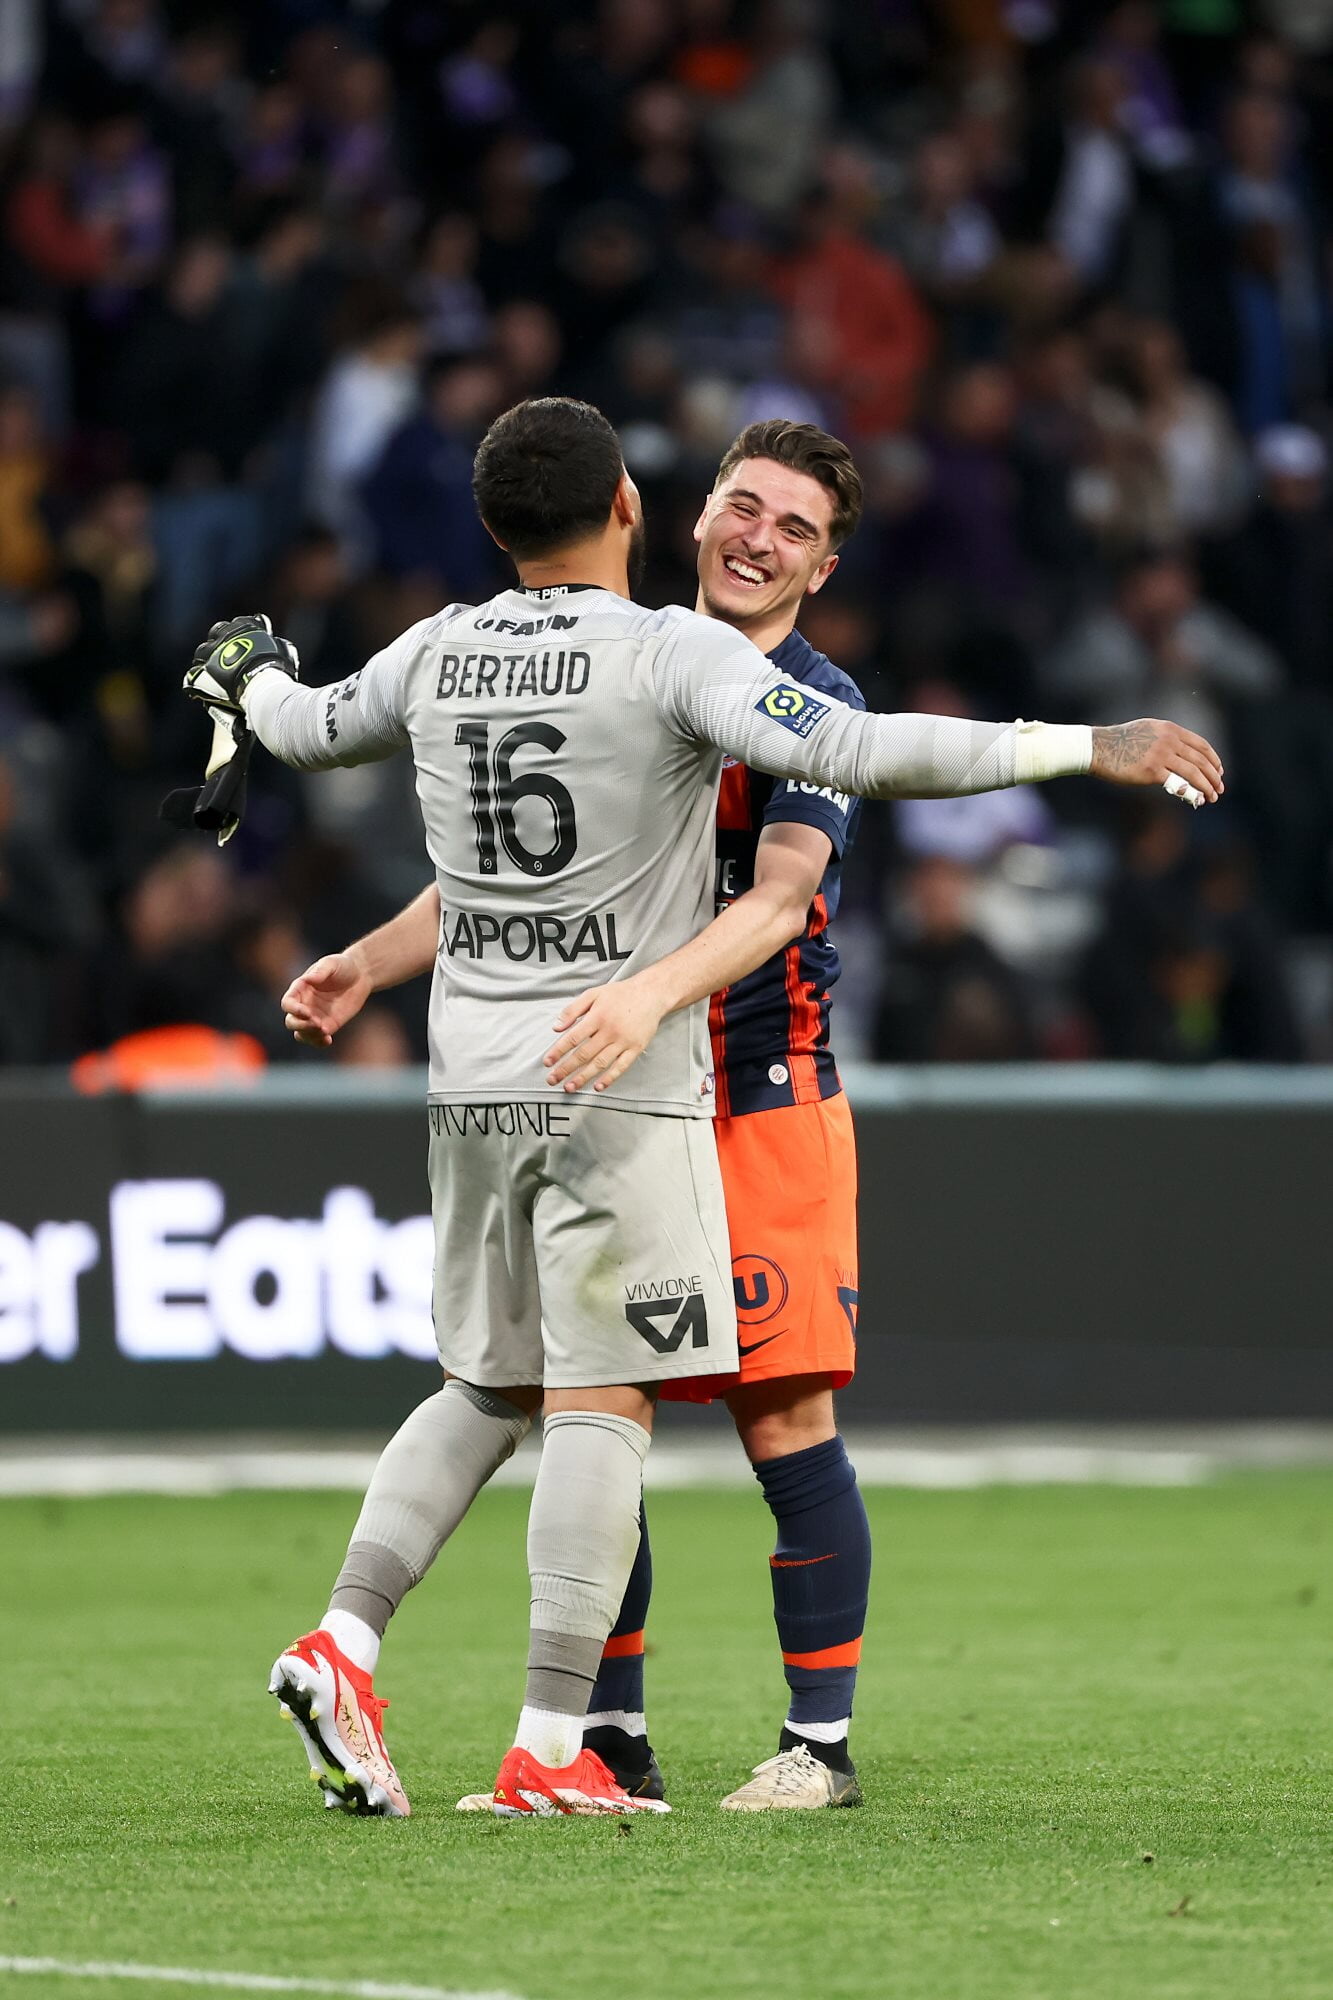 Montpellier HSC's Dimtry Bertaud and Joris Chotard celebrate